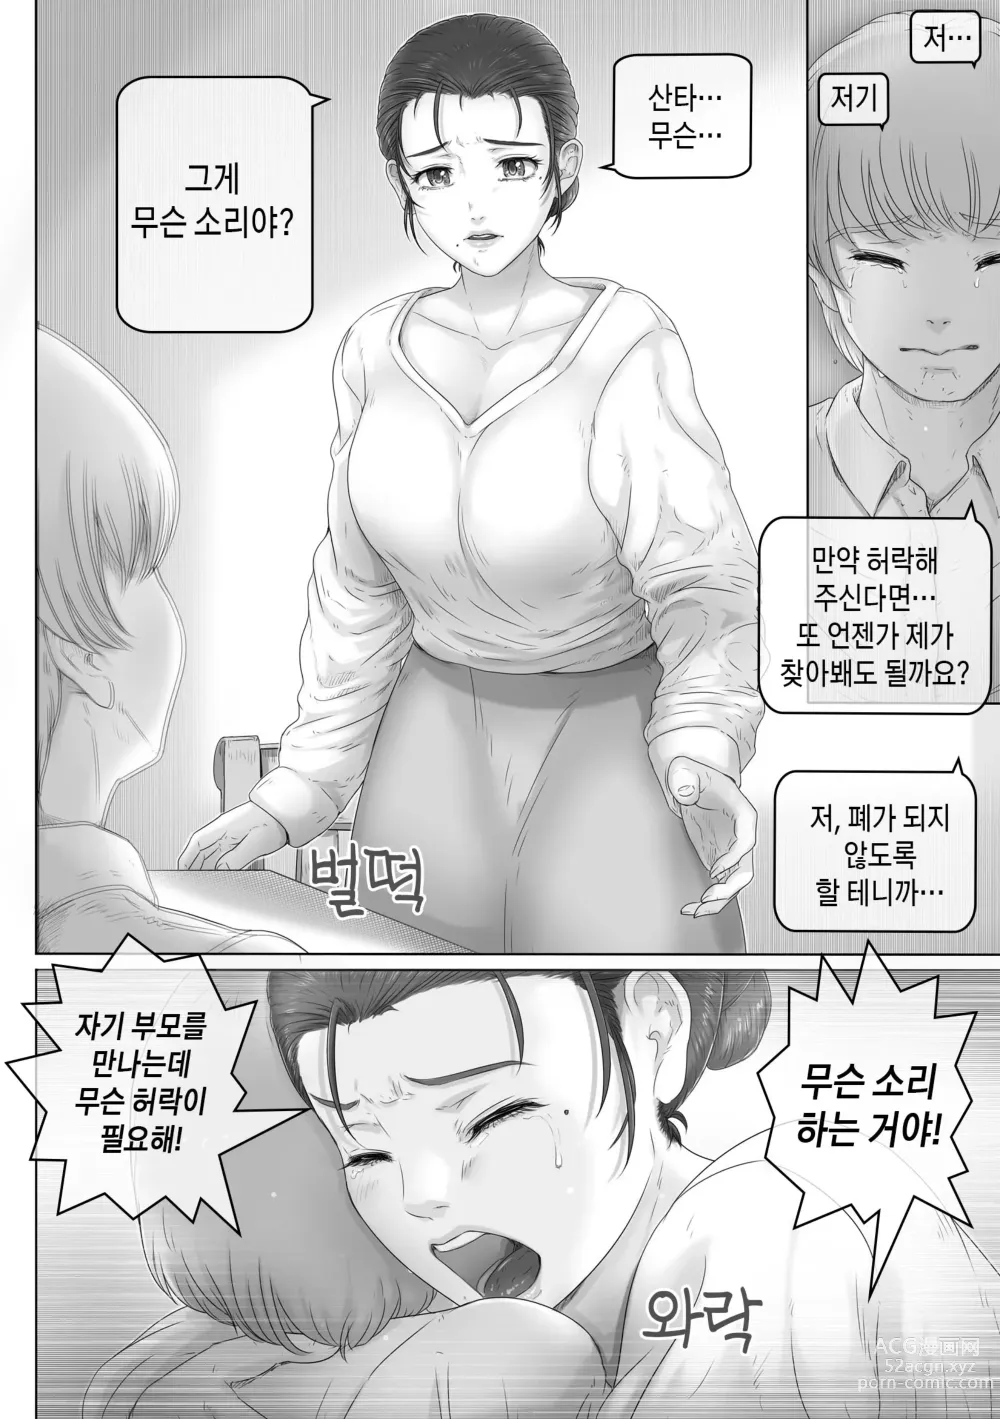 Page 7 of doujinshi 엄마는 거기 있다